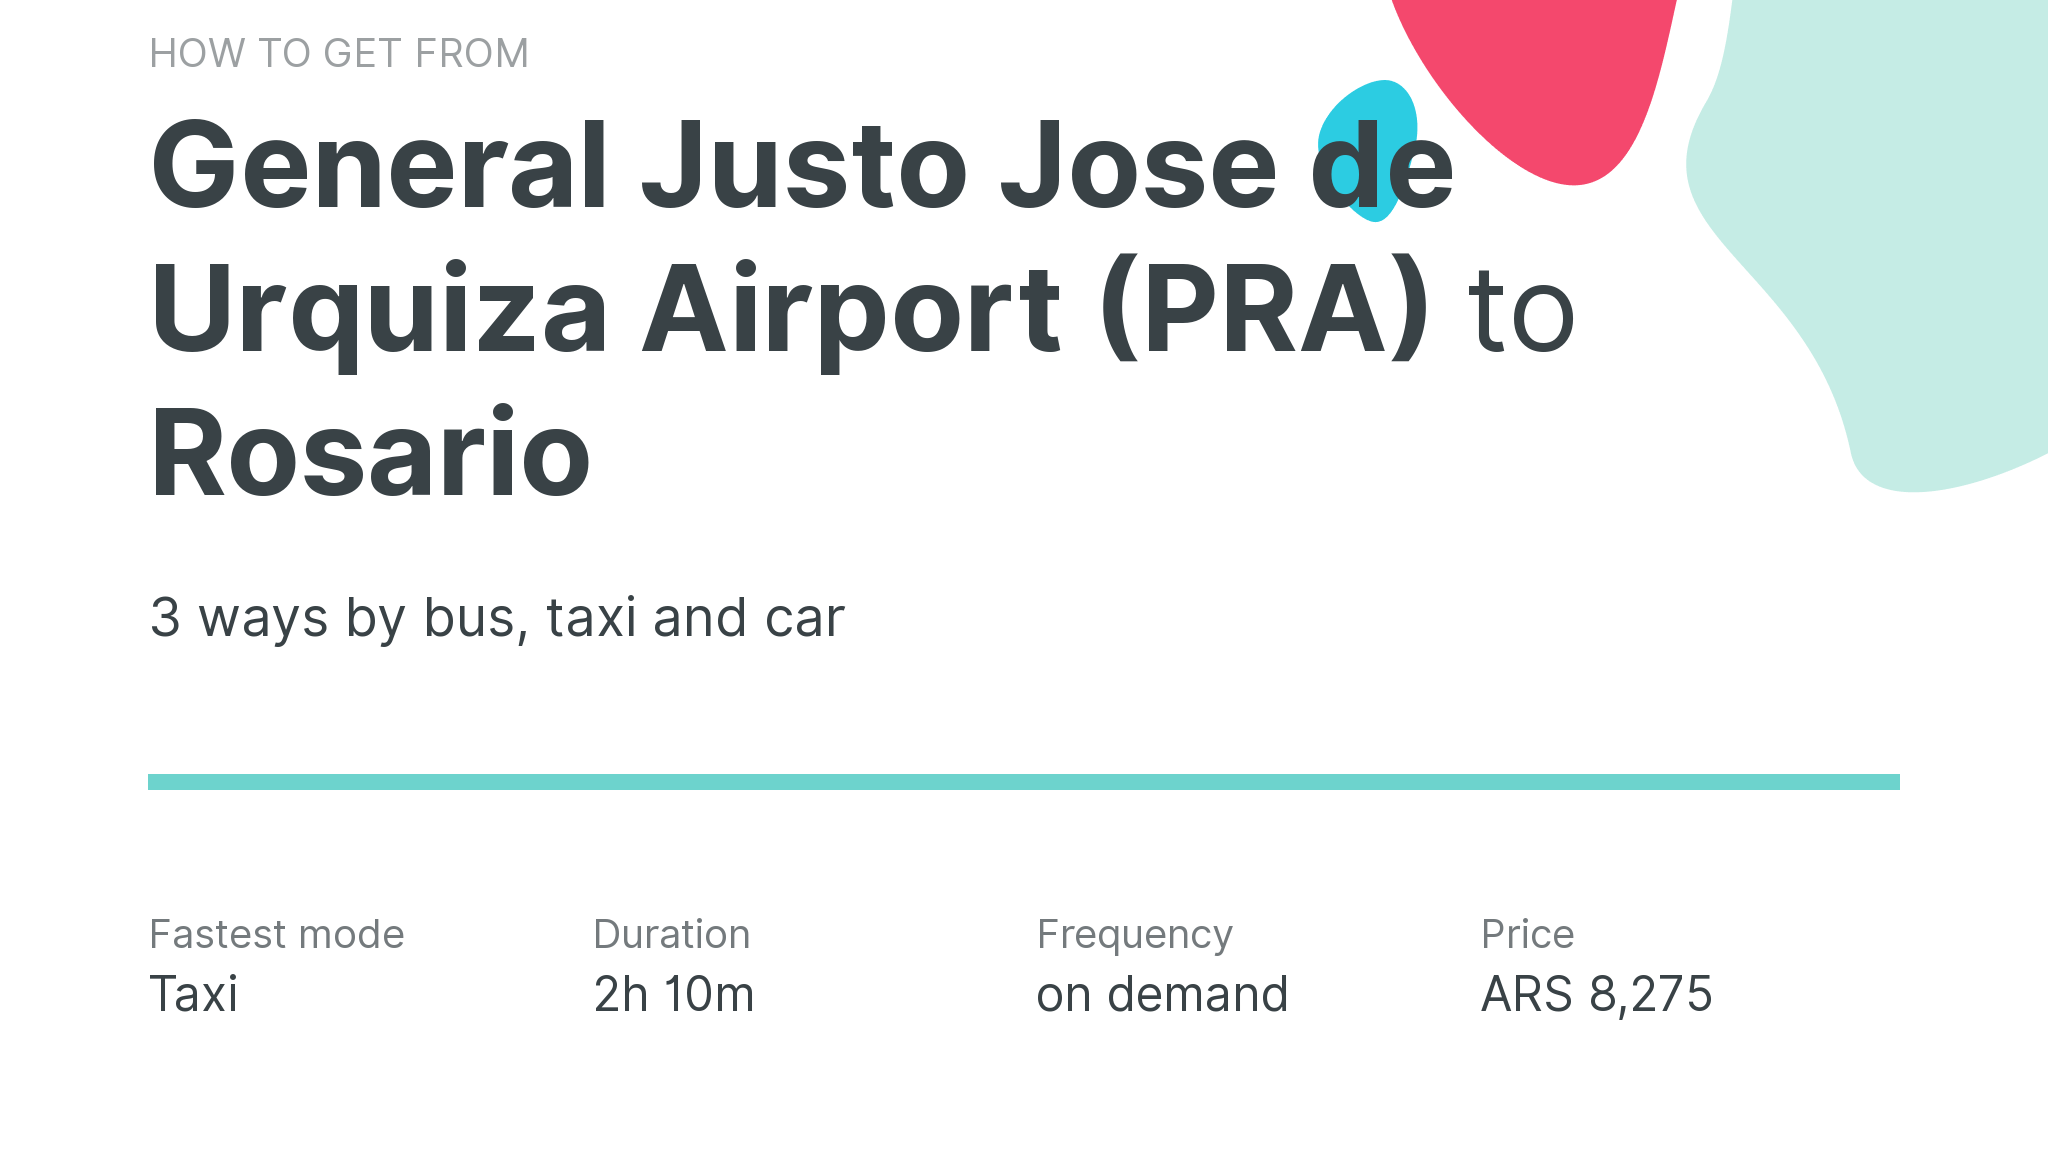 How do I get from General Justo Jose de Urquiza Airport (PRA) to Rosario